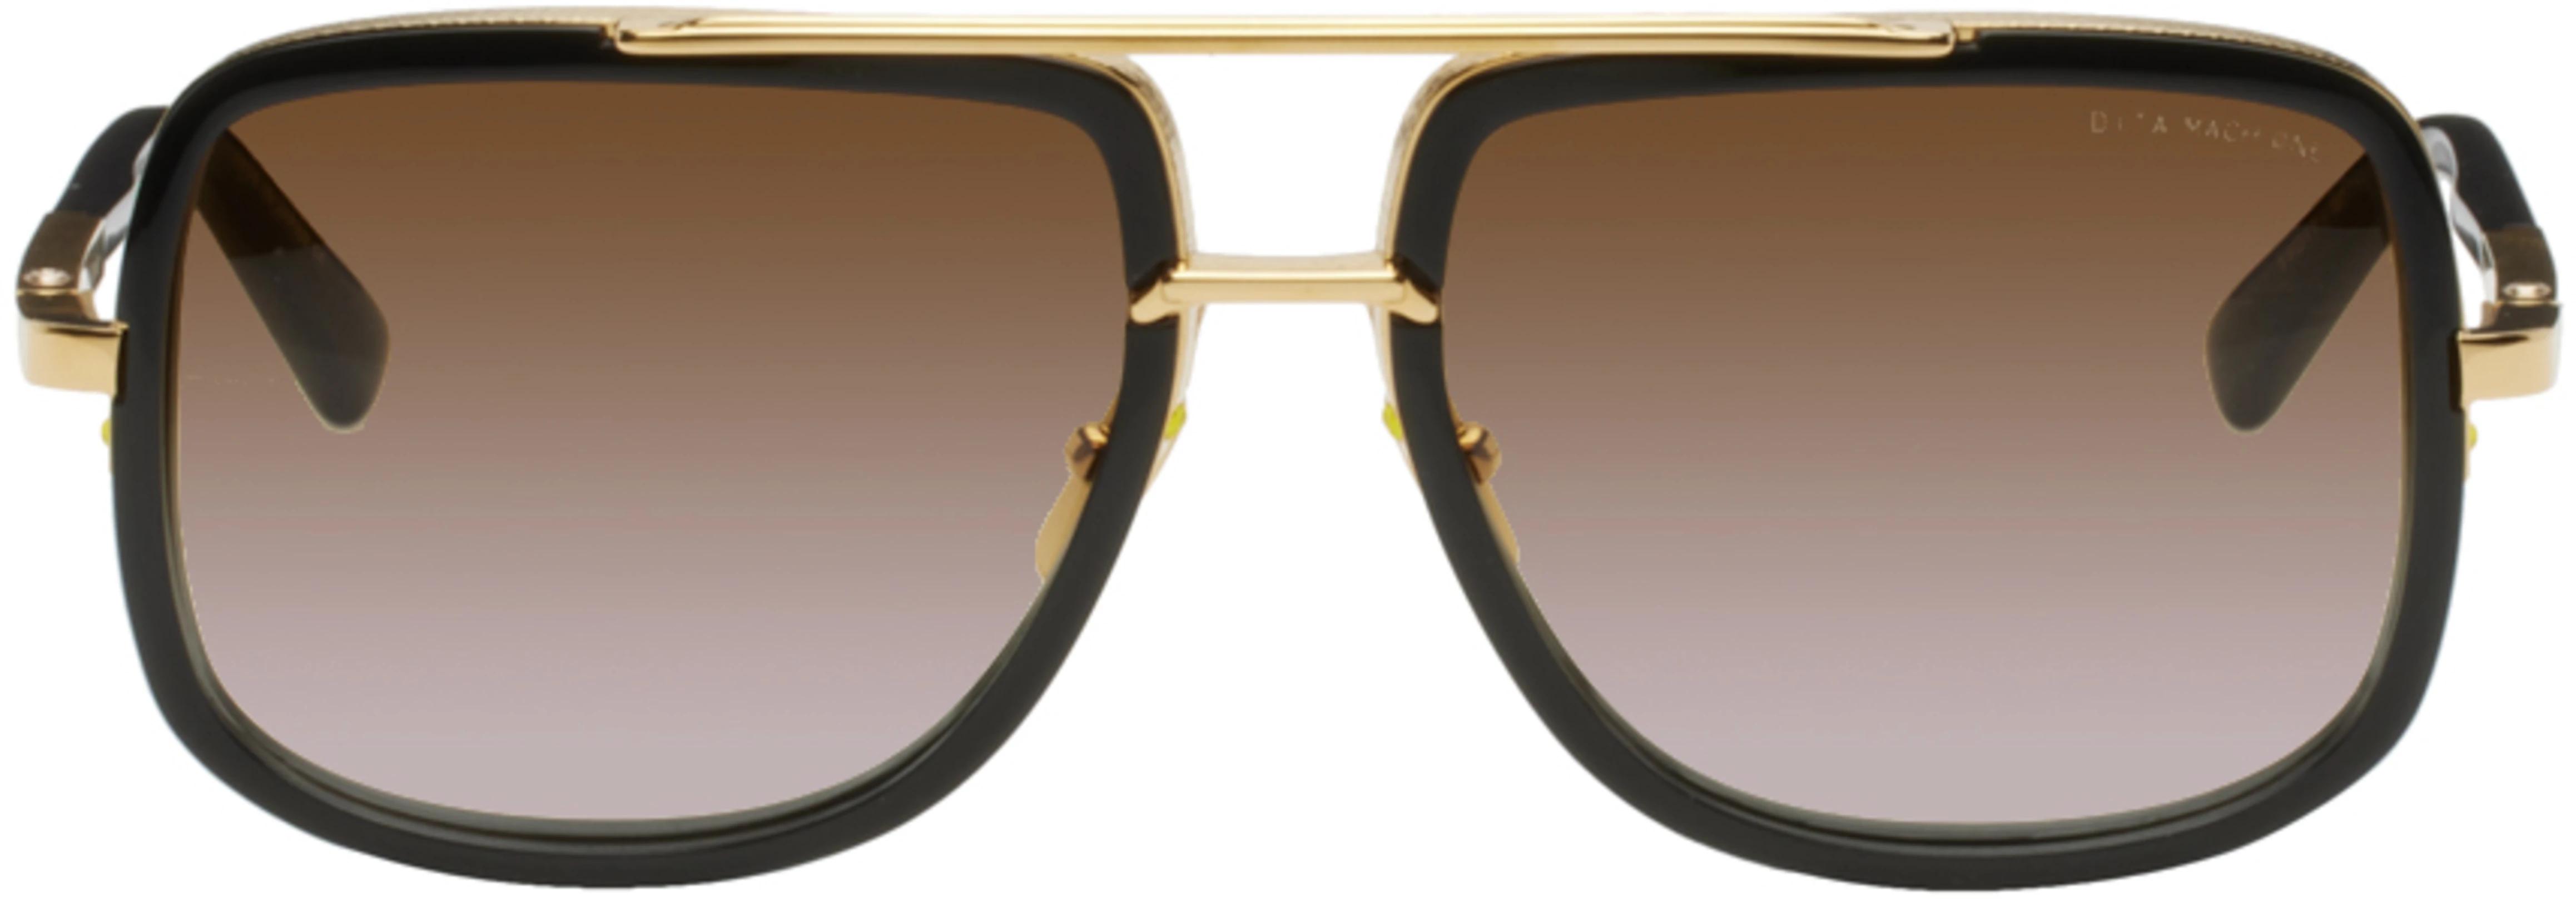 Black & Gold Mach-One Sunglasses by DITA